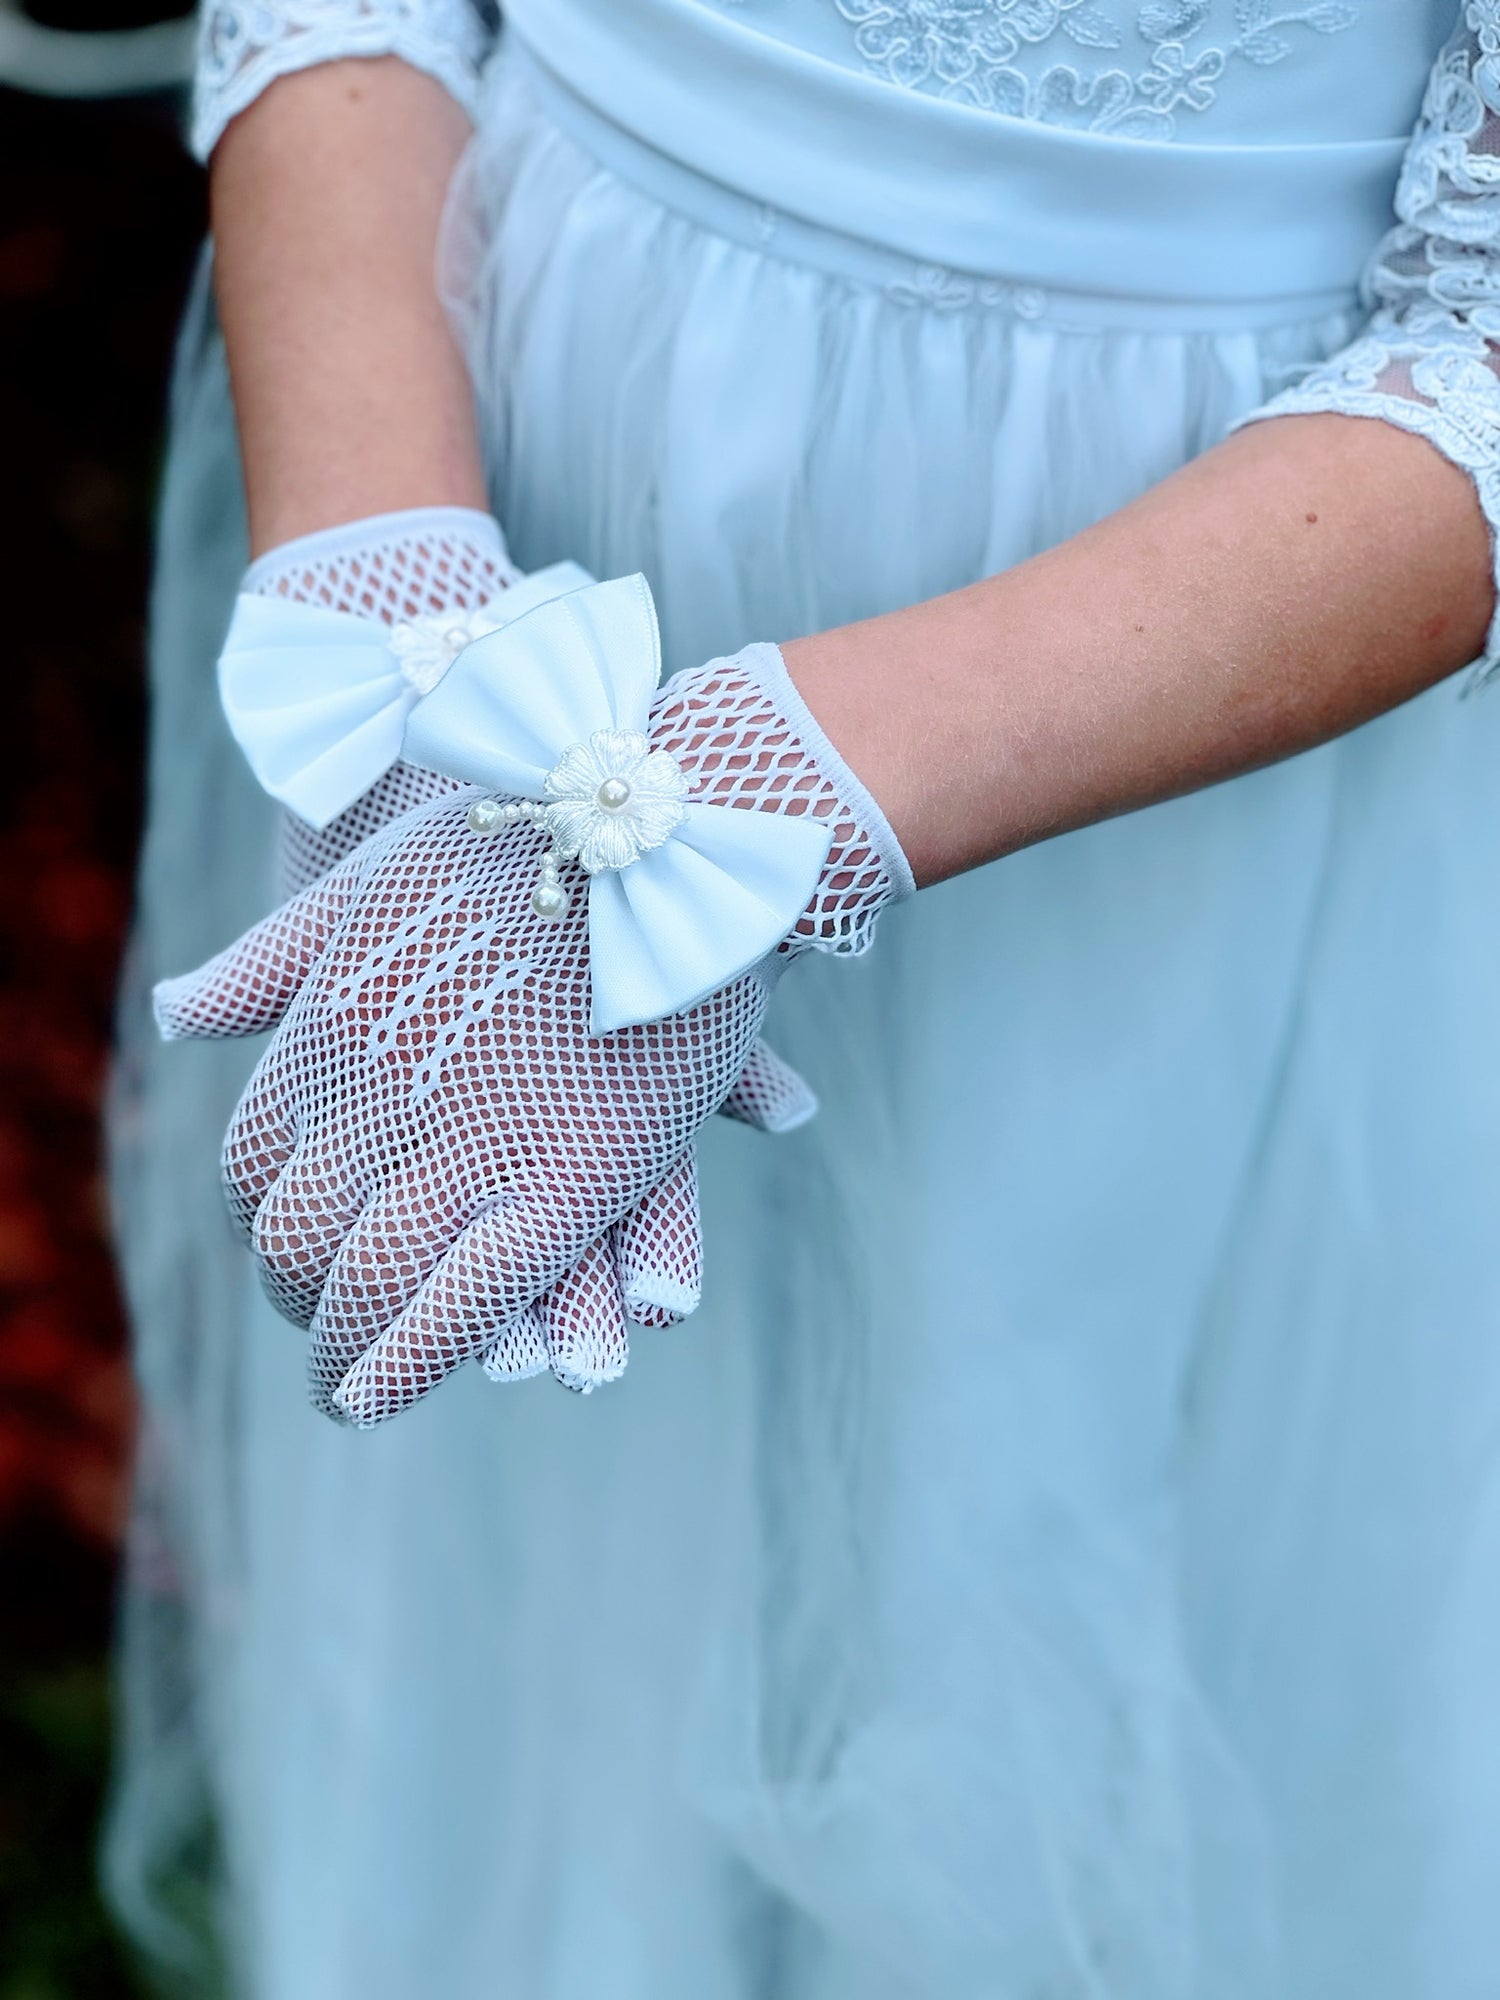 First Communion Set for Girls - Veil, Gloves, &amp; Necklace